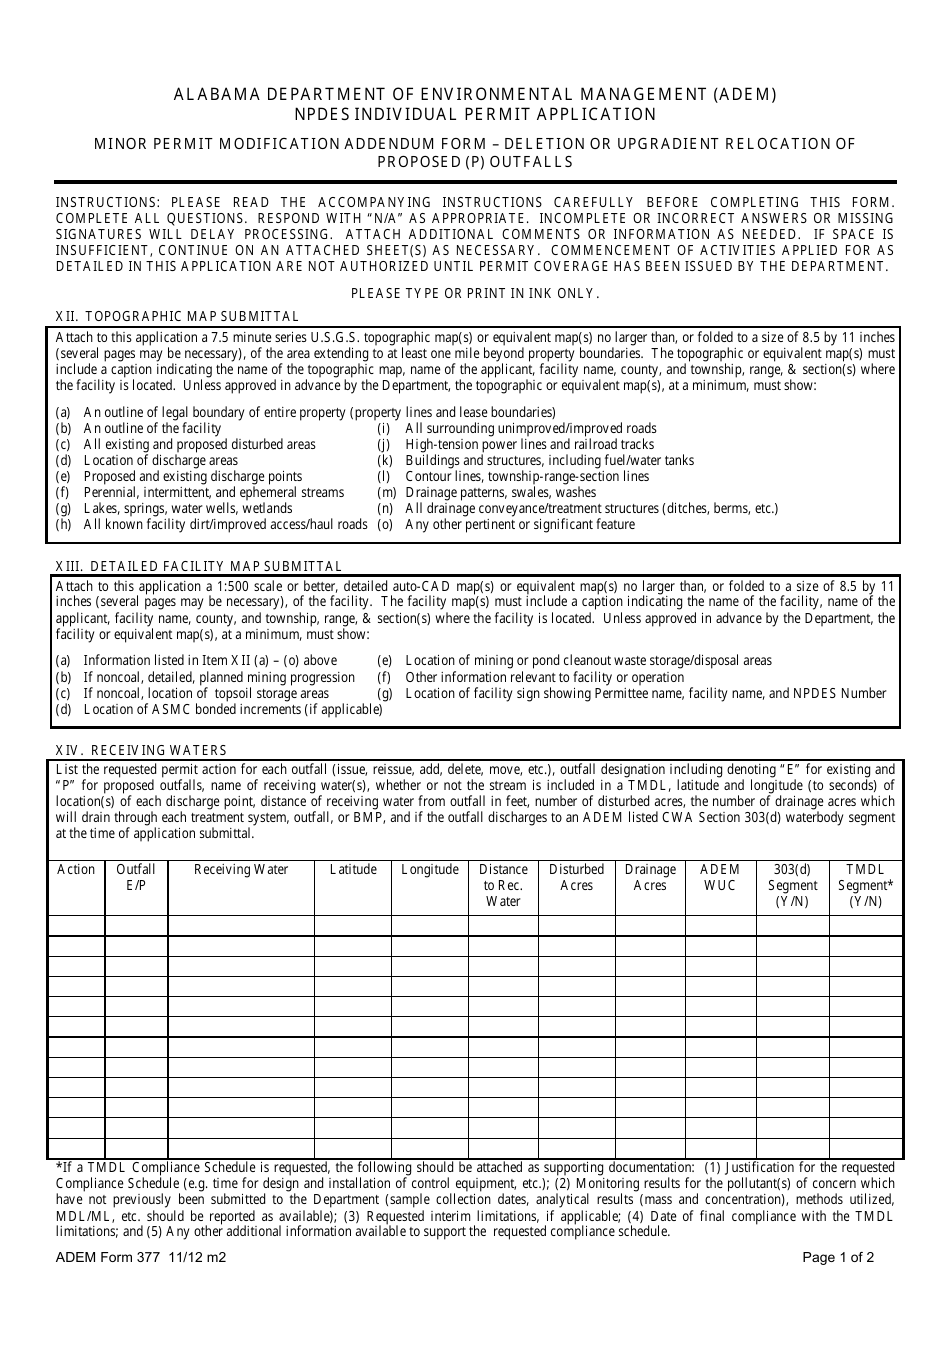 ADEM Form 377 Minor Permit Modification Addendum Form - Npdes Individual Permit Application - Alabama, Page 1